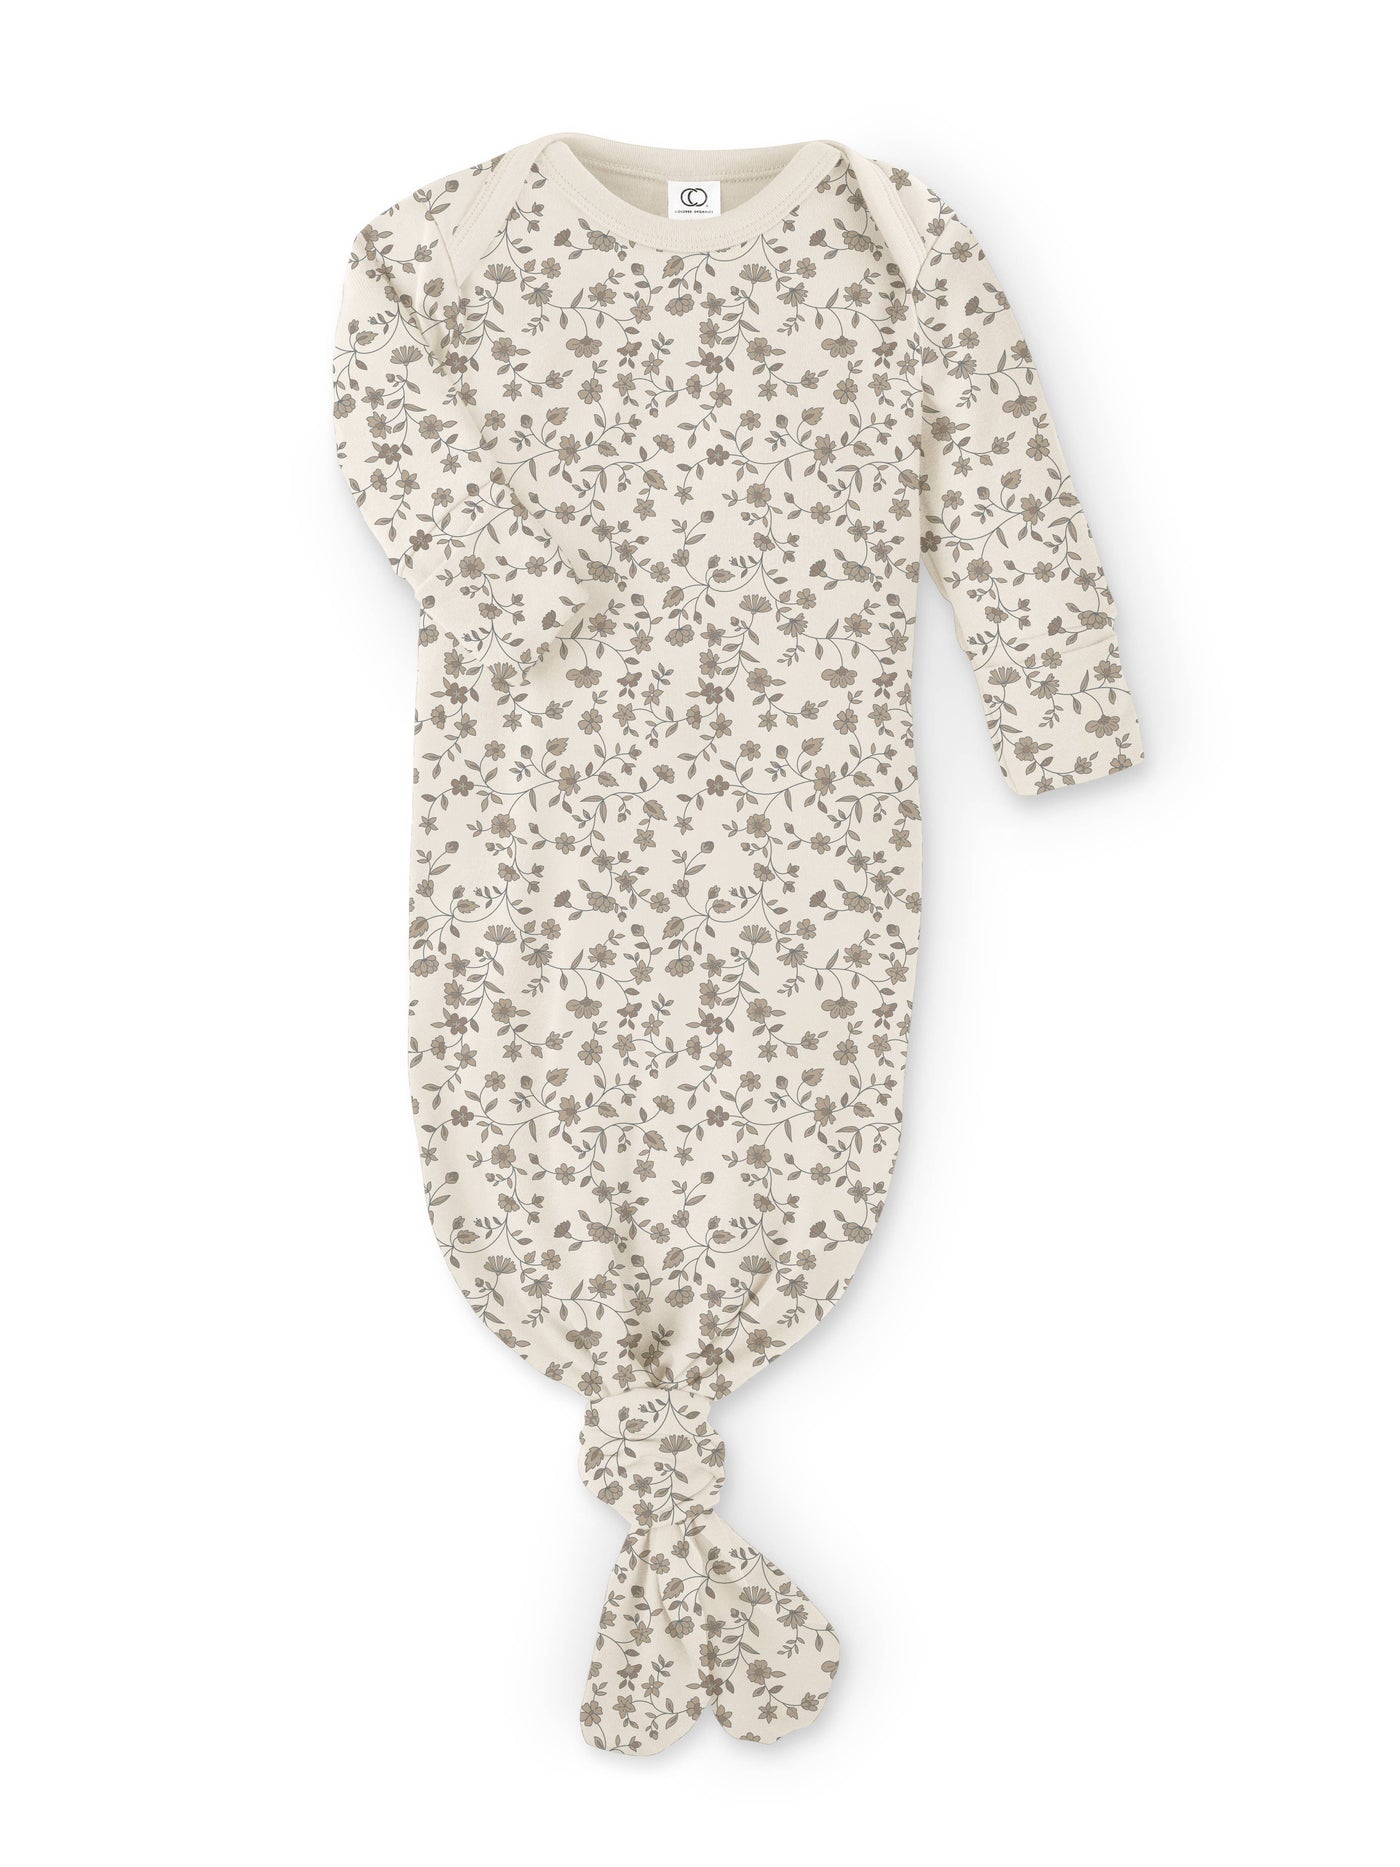 Landry Infant Gown - Pip Vine / Truffle 0-3M